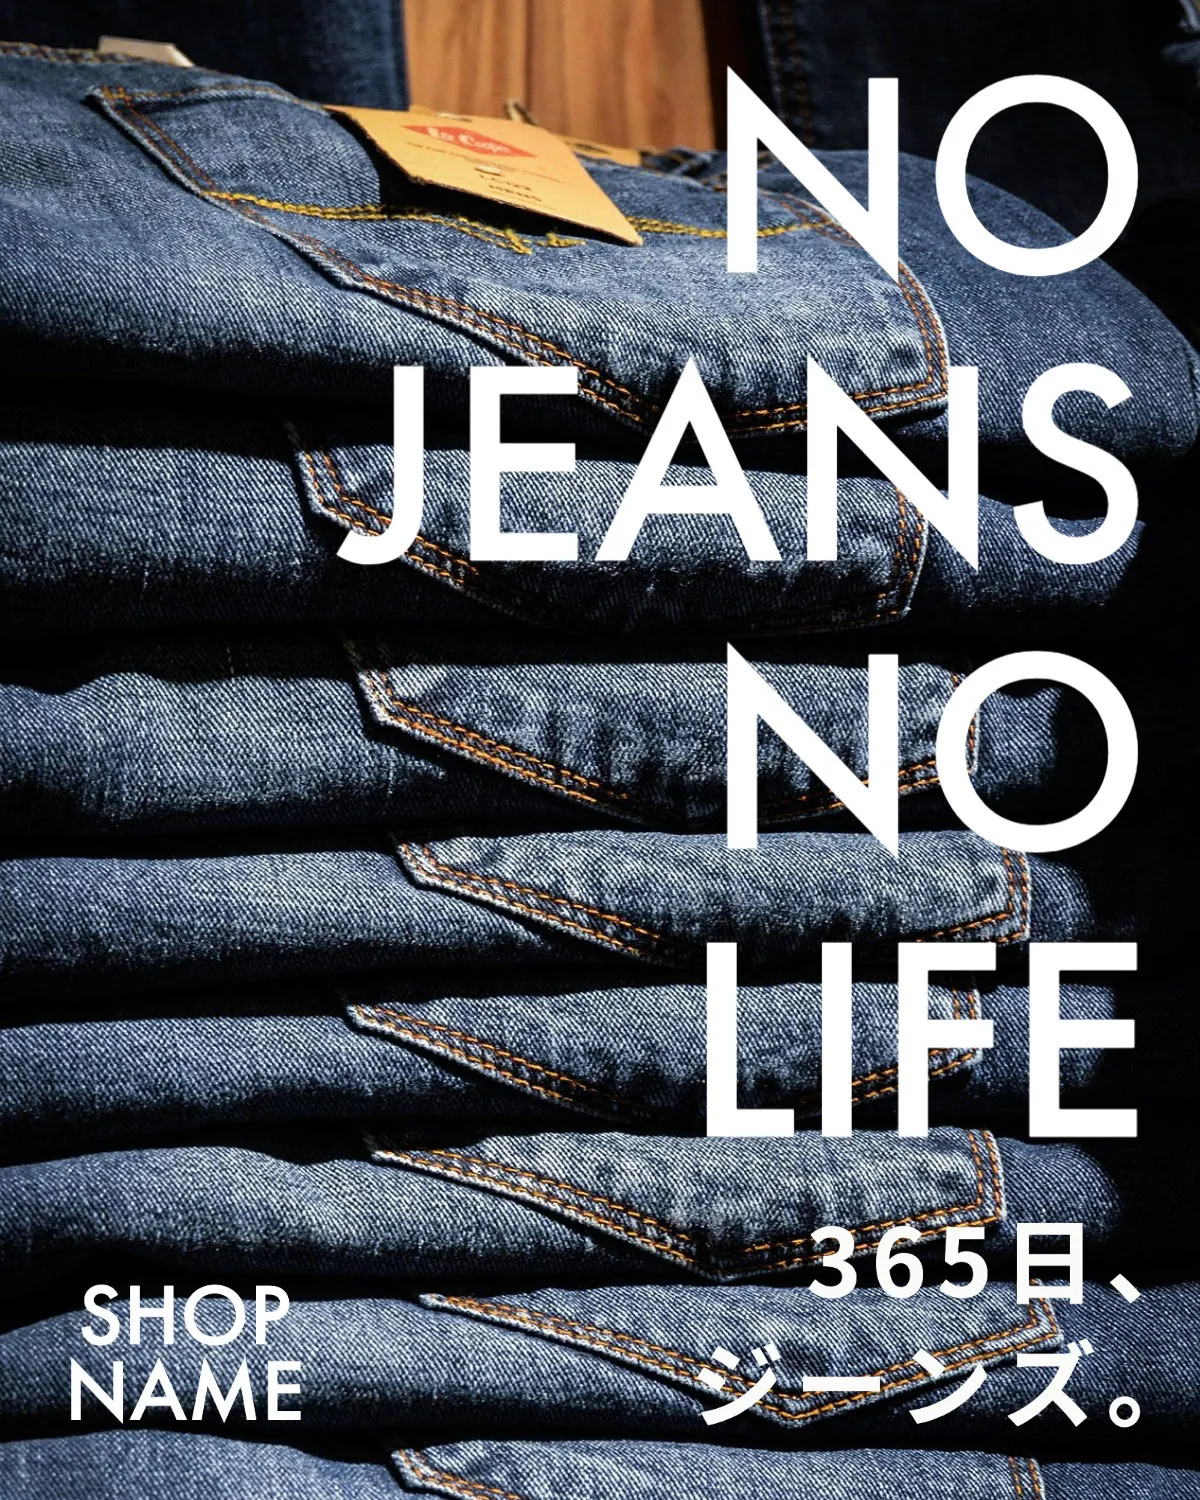 Jeans shop Instagram Post